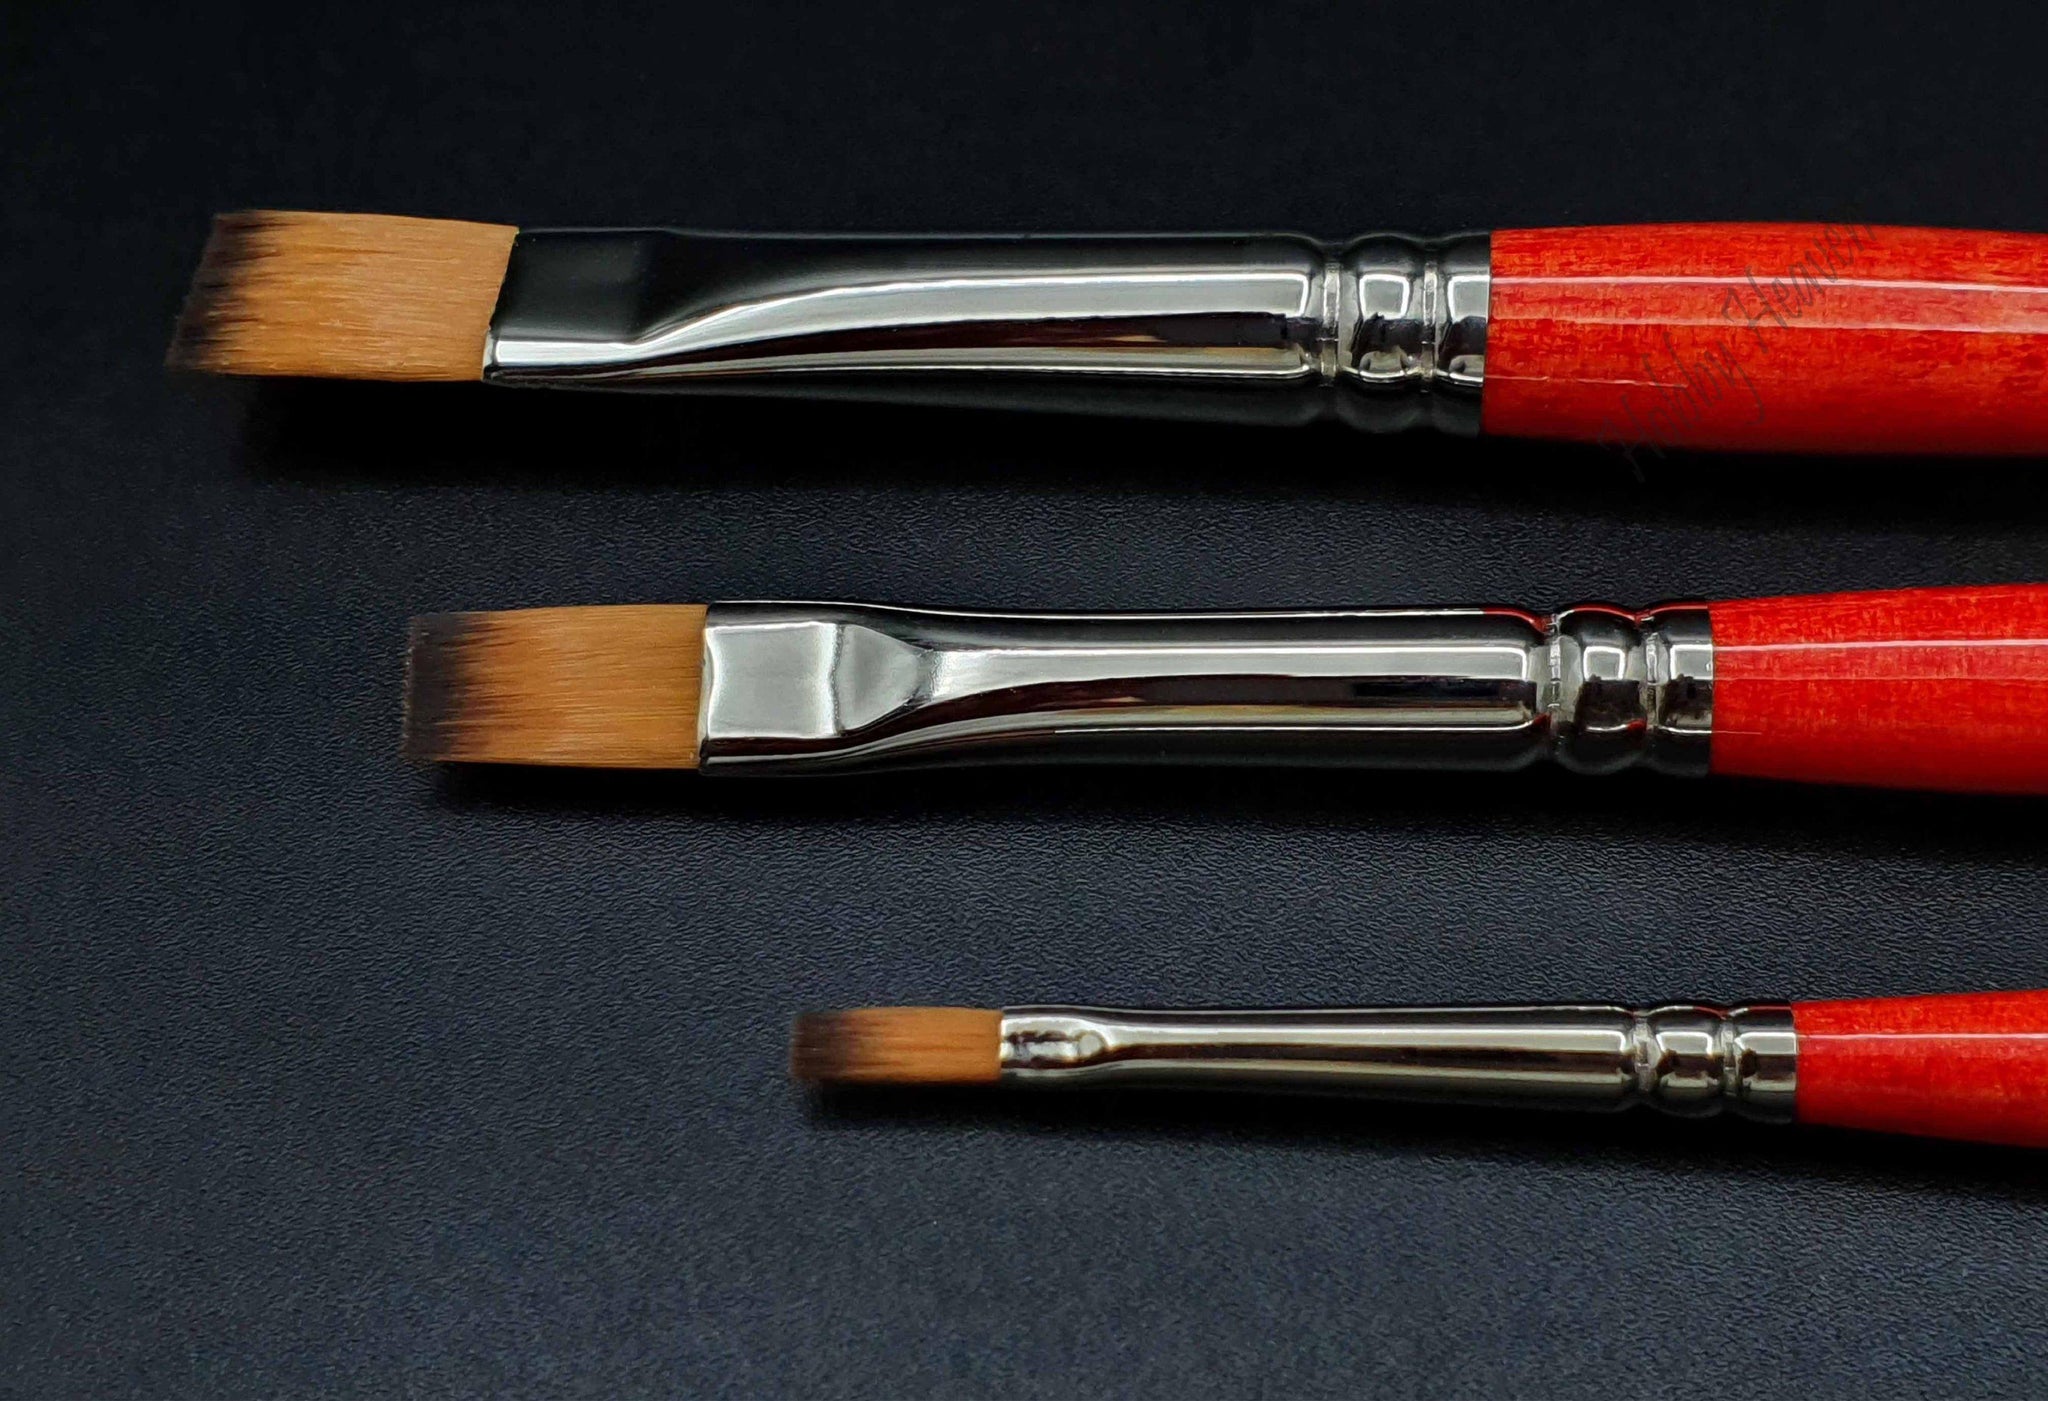 Raphael 8254 Kaerell Nylon Fiber Acrylic Brush, Durable, Stable